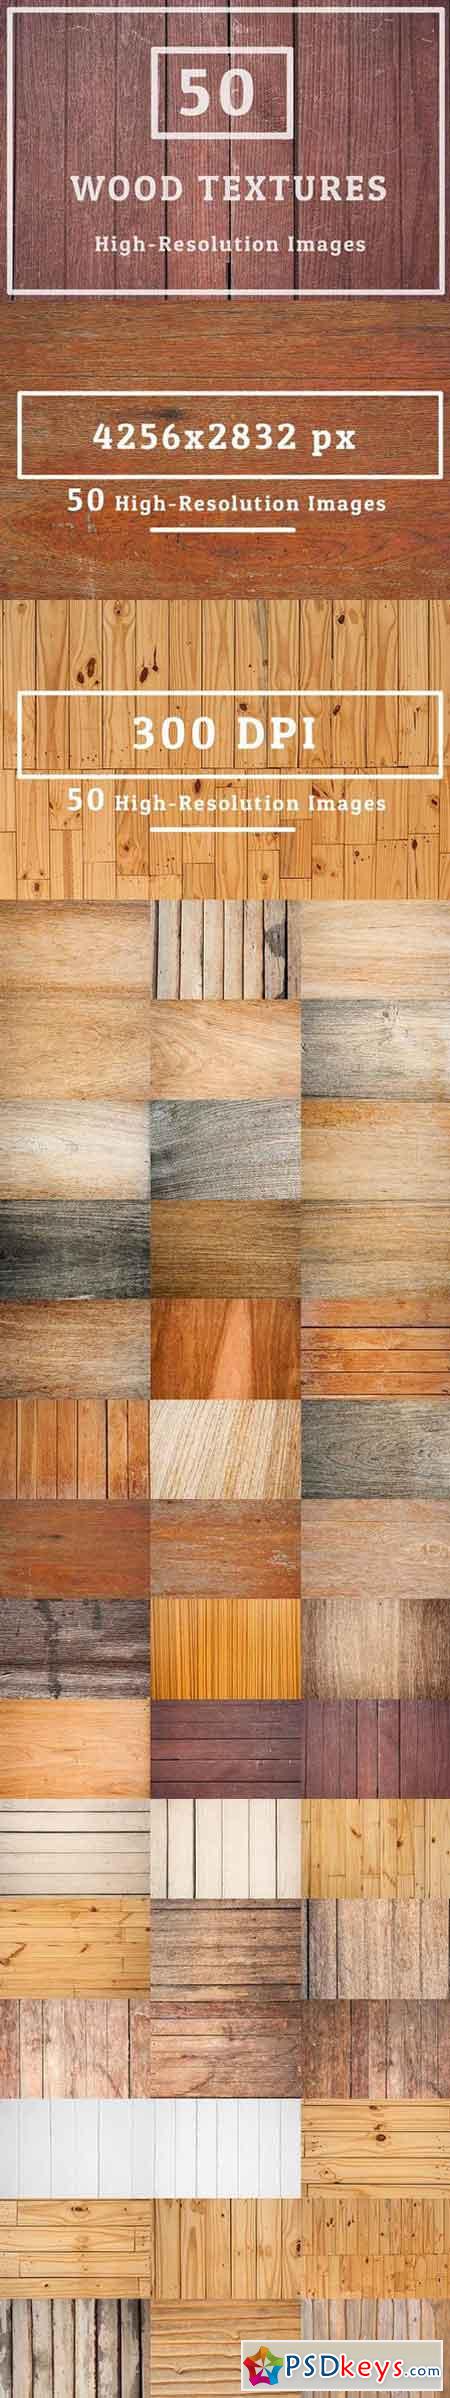 50 Wood Texture Background Set 07 623589